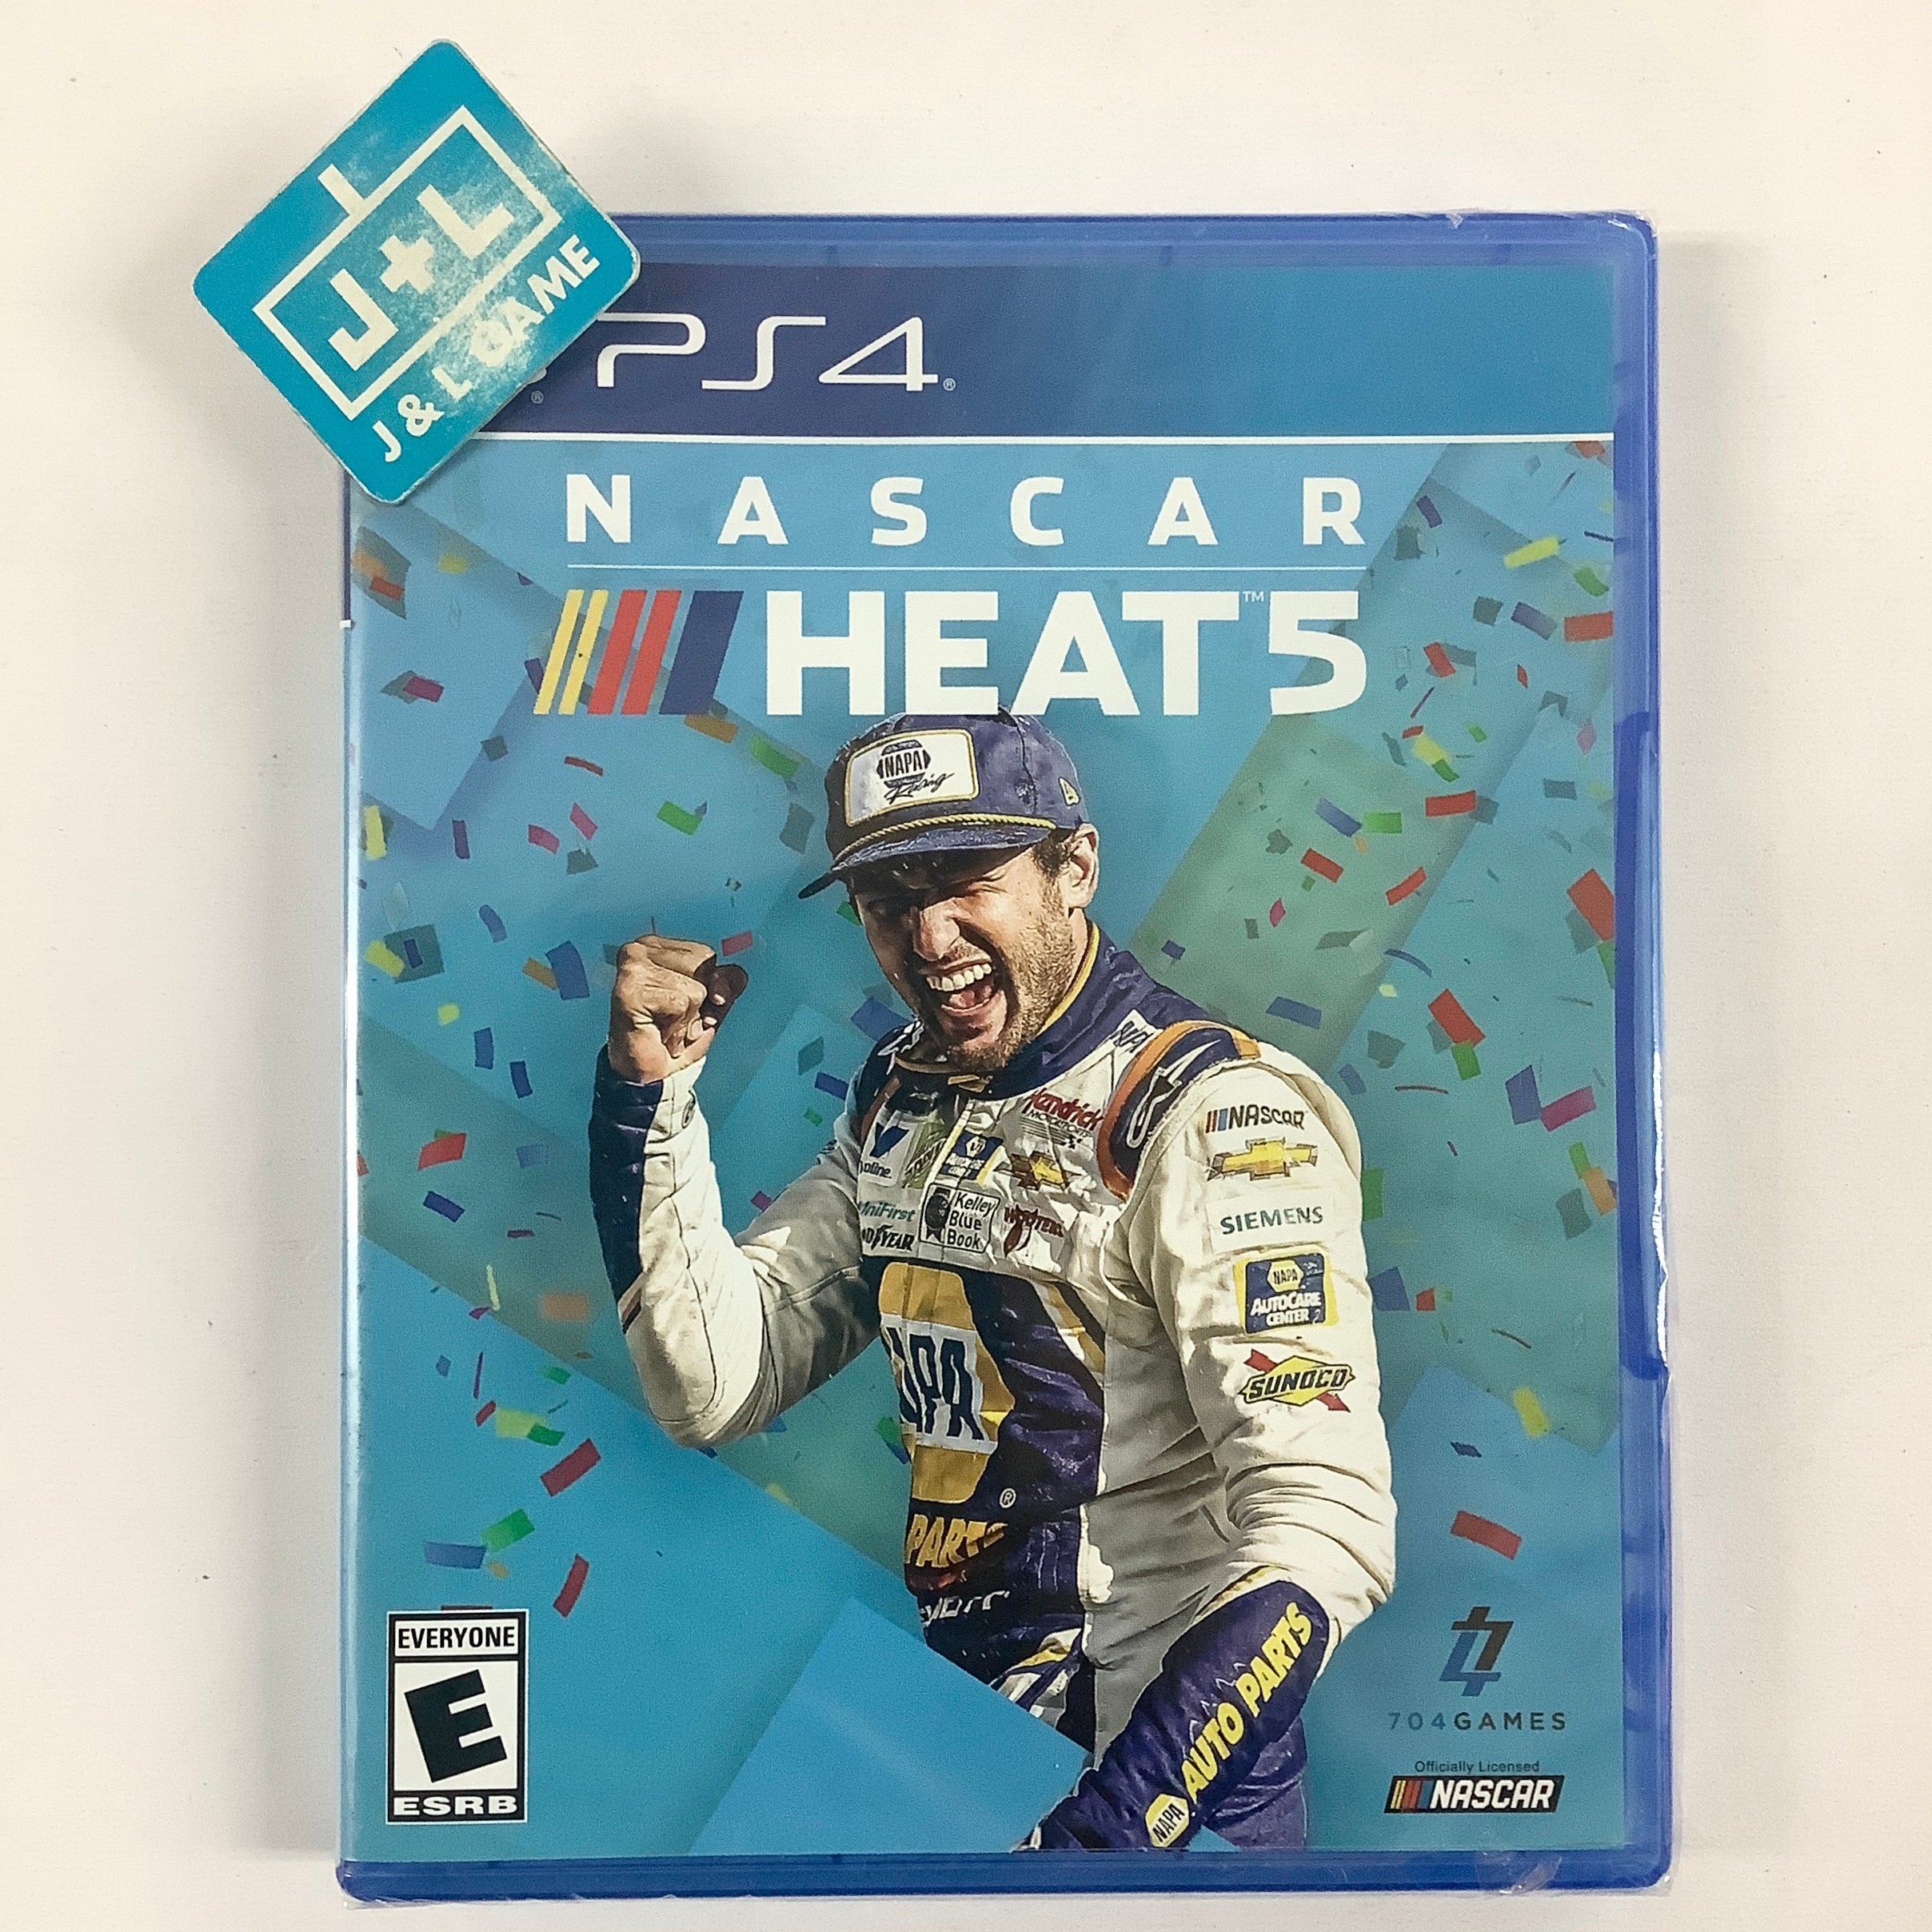 NASCAR Heat 5 - (PS4) PlayStation 4 Video Games 704Games   